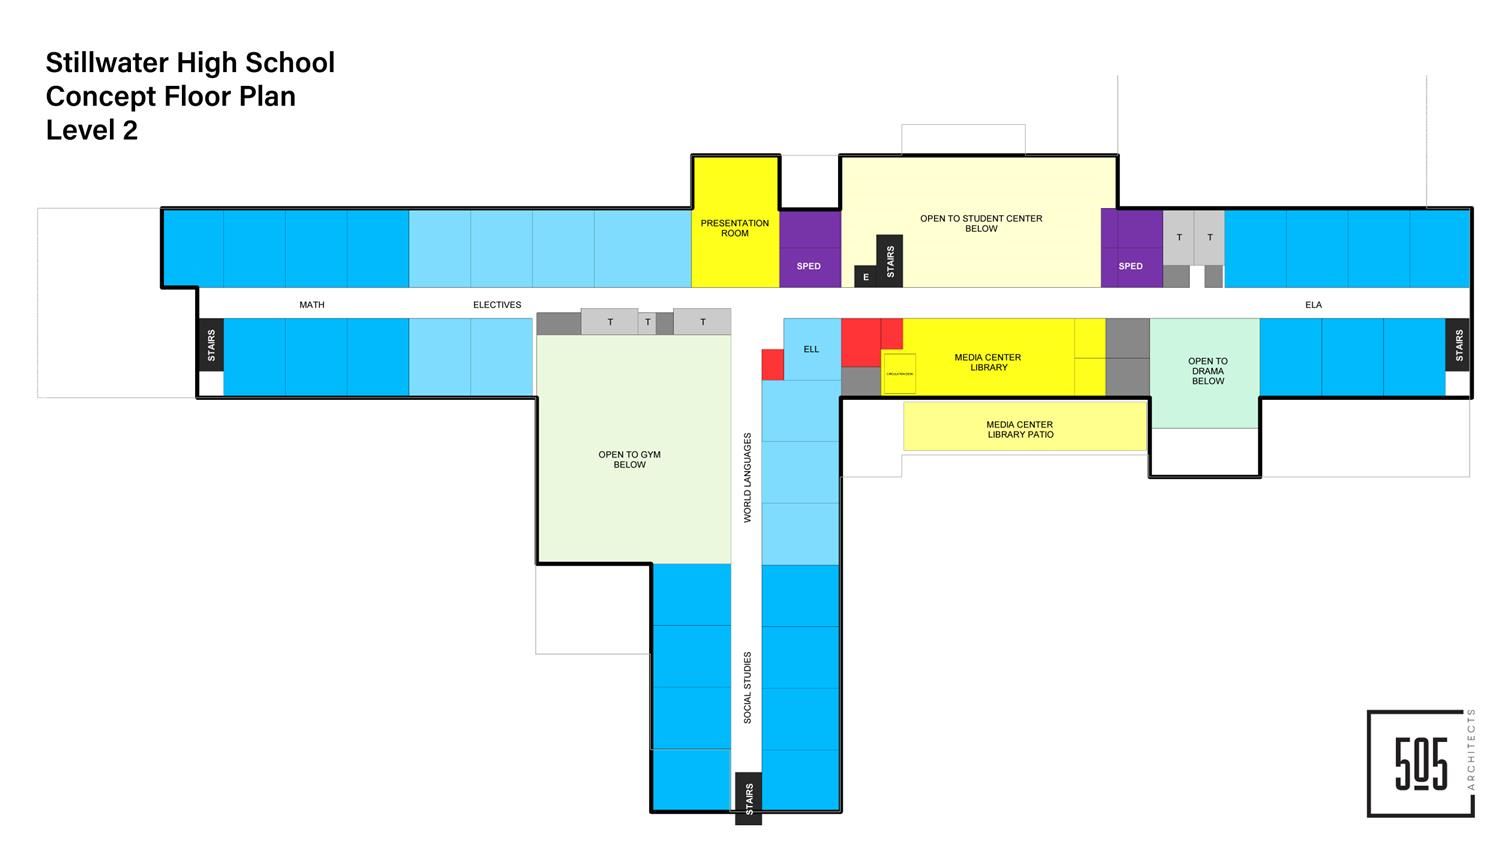 SHS Concept Floor Plan Level 2